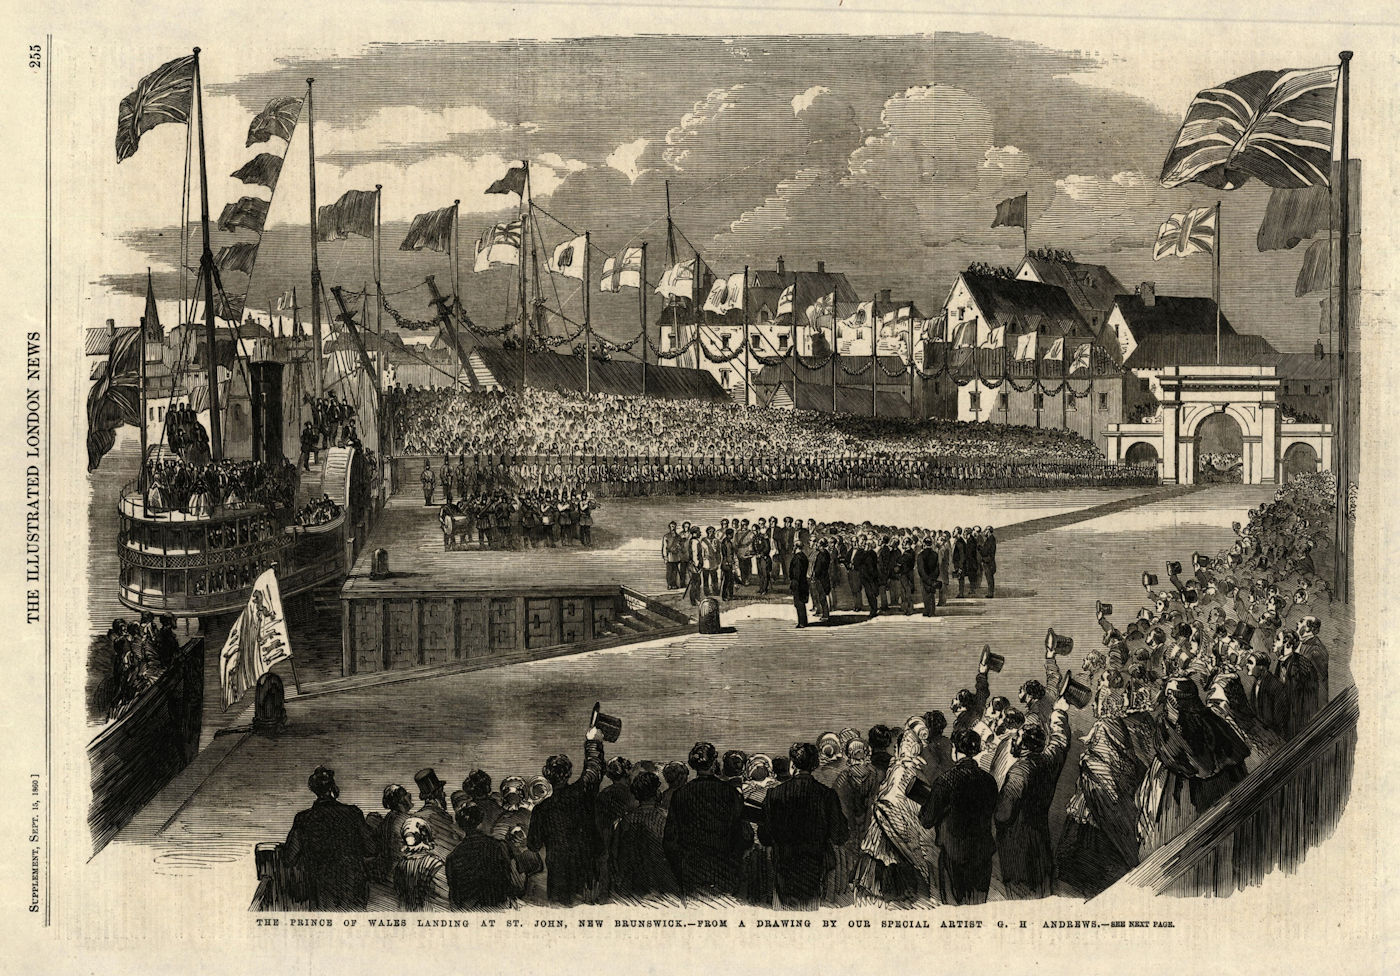 Associate Product Prince of Wales (later Edward VII) landing at St. John, New Brunswick 1860